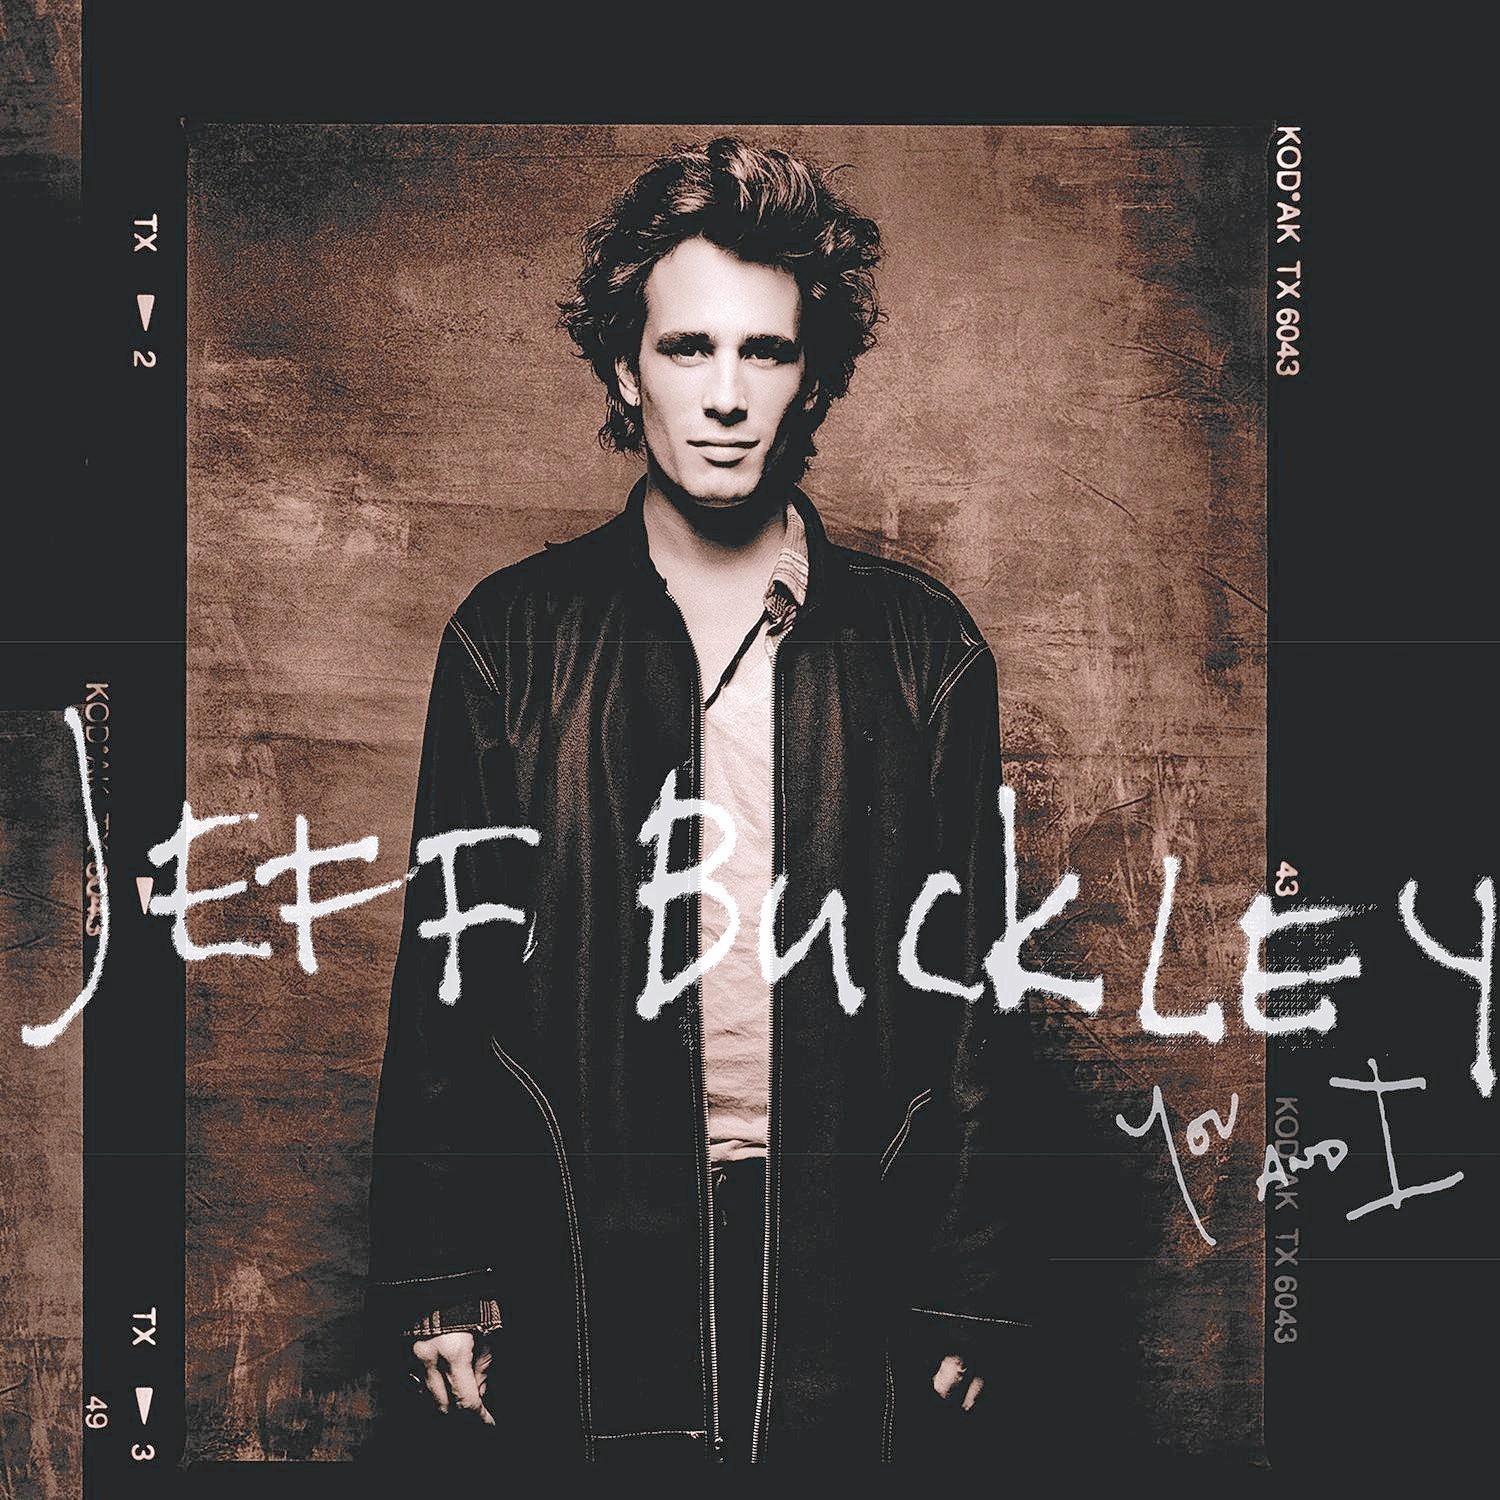 Early Jeff Buckley Recordings Depict Struggle Not Genius